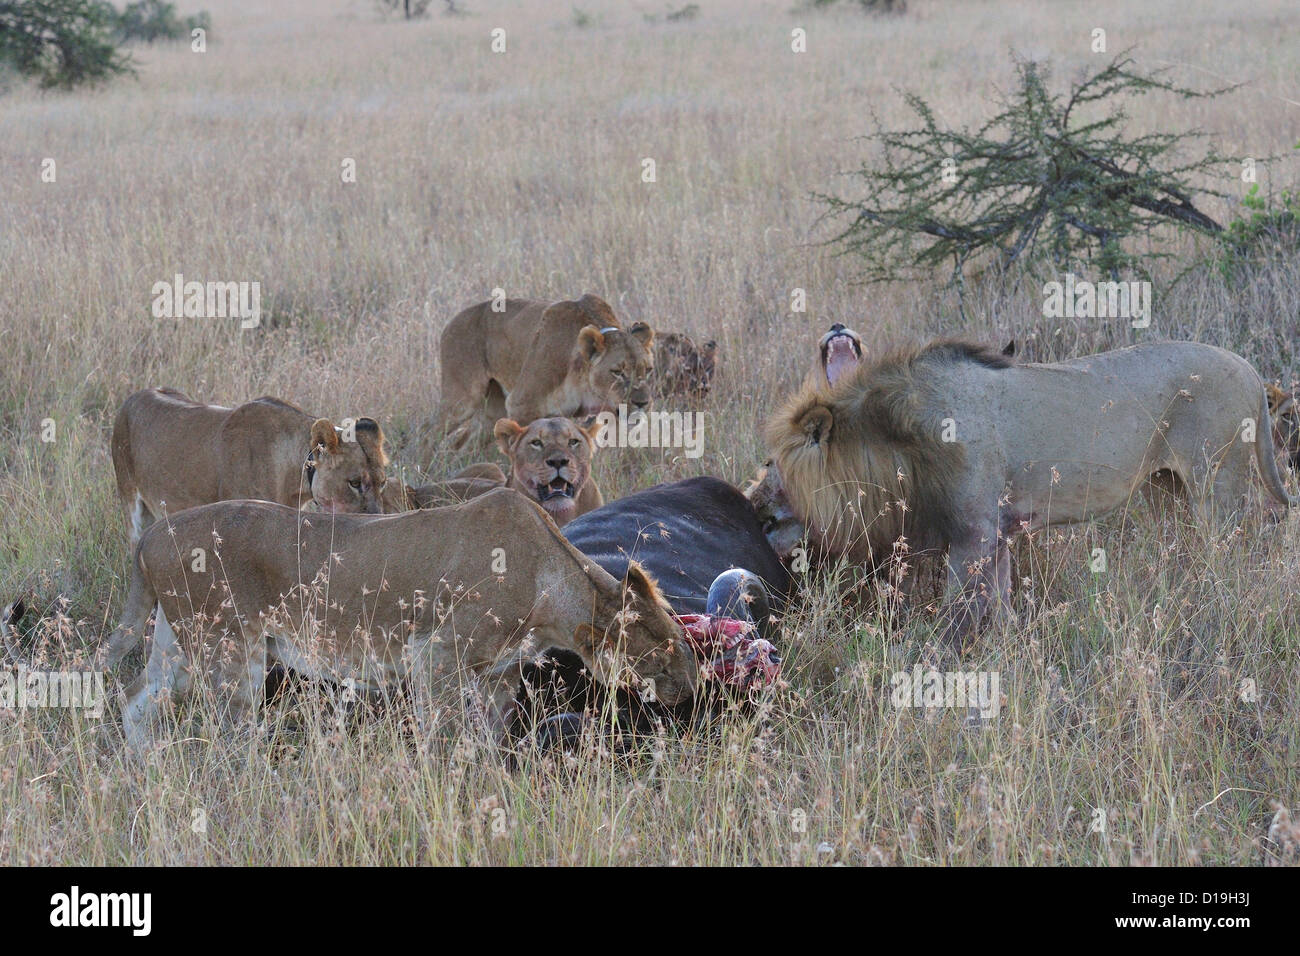 Lions (Panthera leo), predation on African Buffalo Syncerus caffer, Mugie Sanctuary, Kenya, Africa Stock Photo